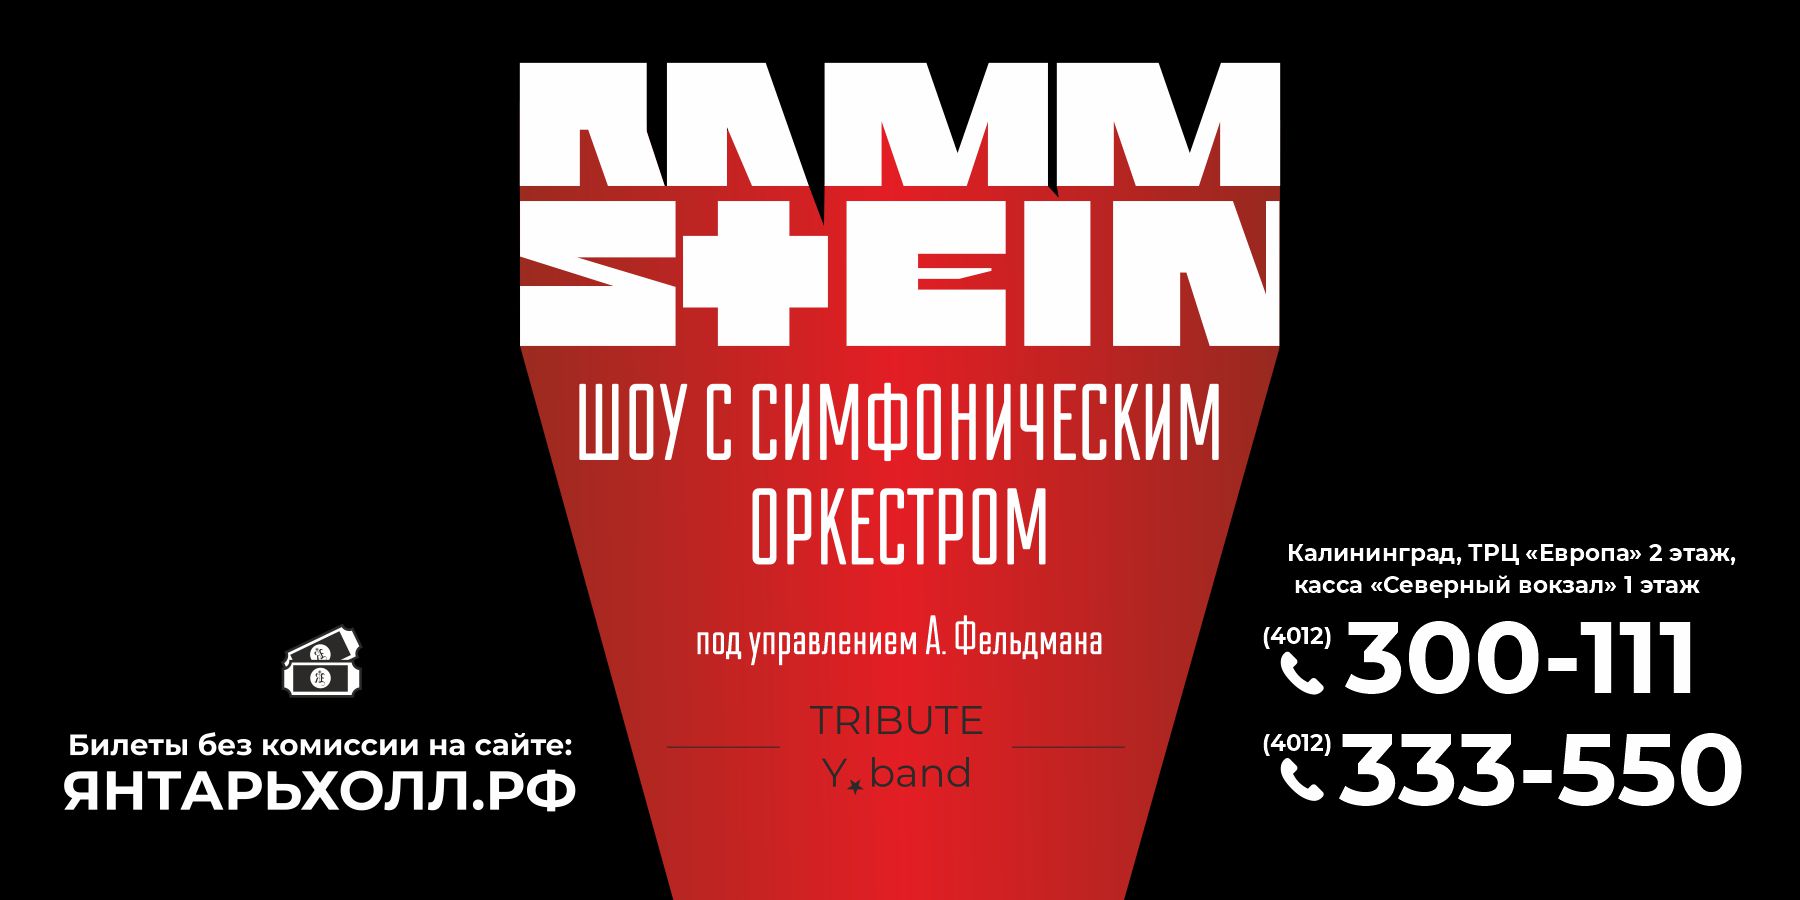 Tribute Rammstein  с симфоническим оркестром 